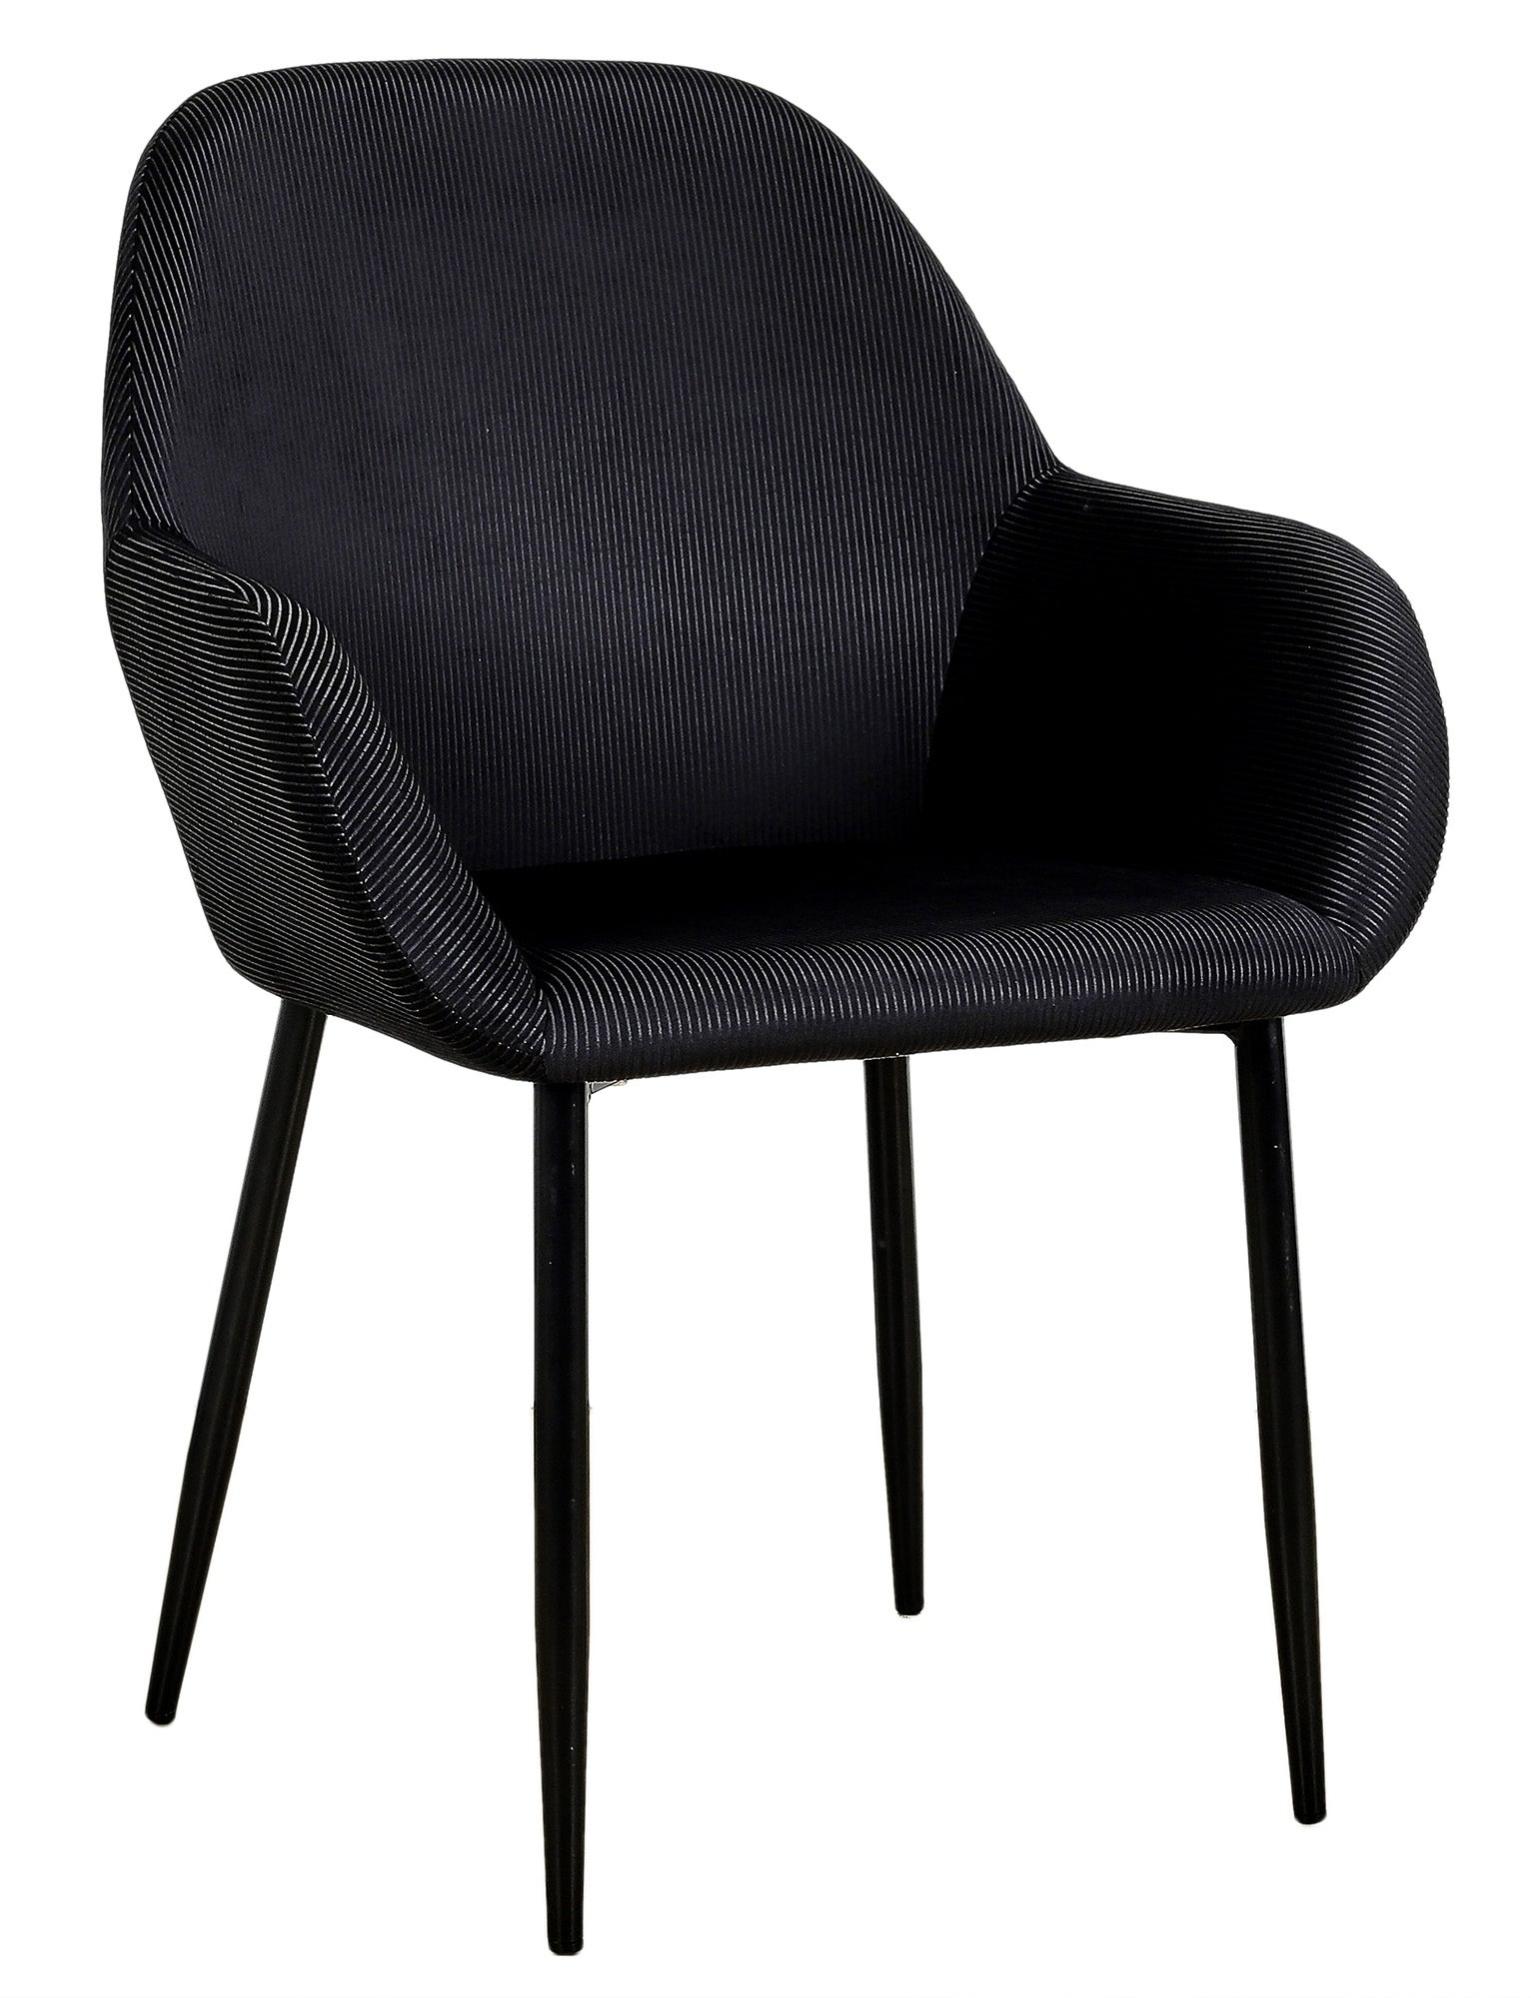 Set de 2 sillas de comedor giulia de madera color negro de 85x55,7x59cm